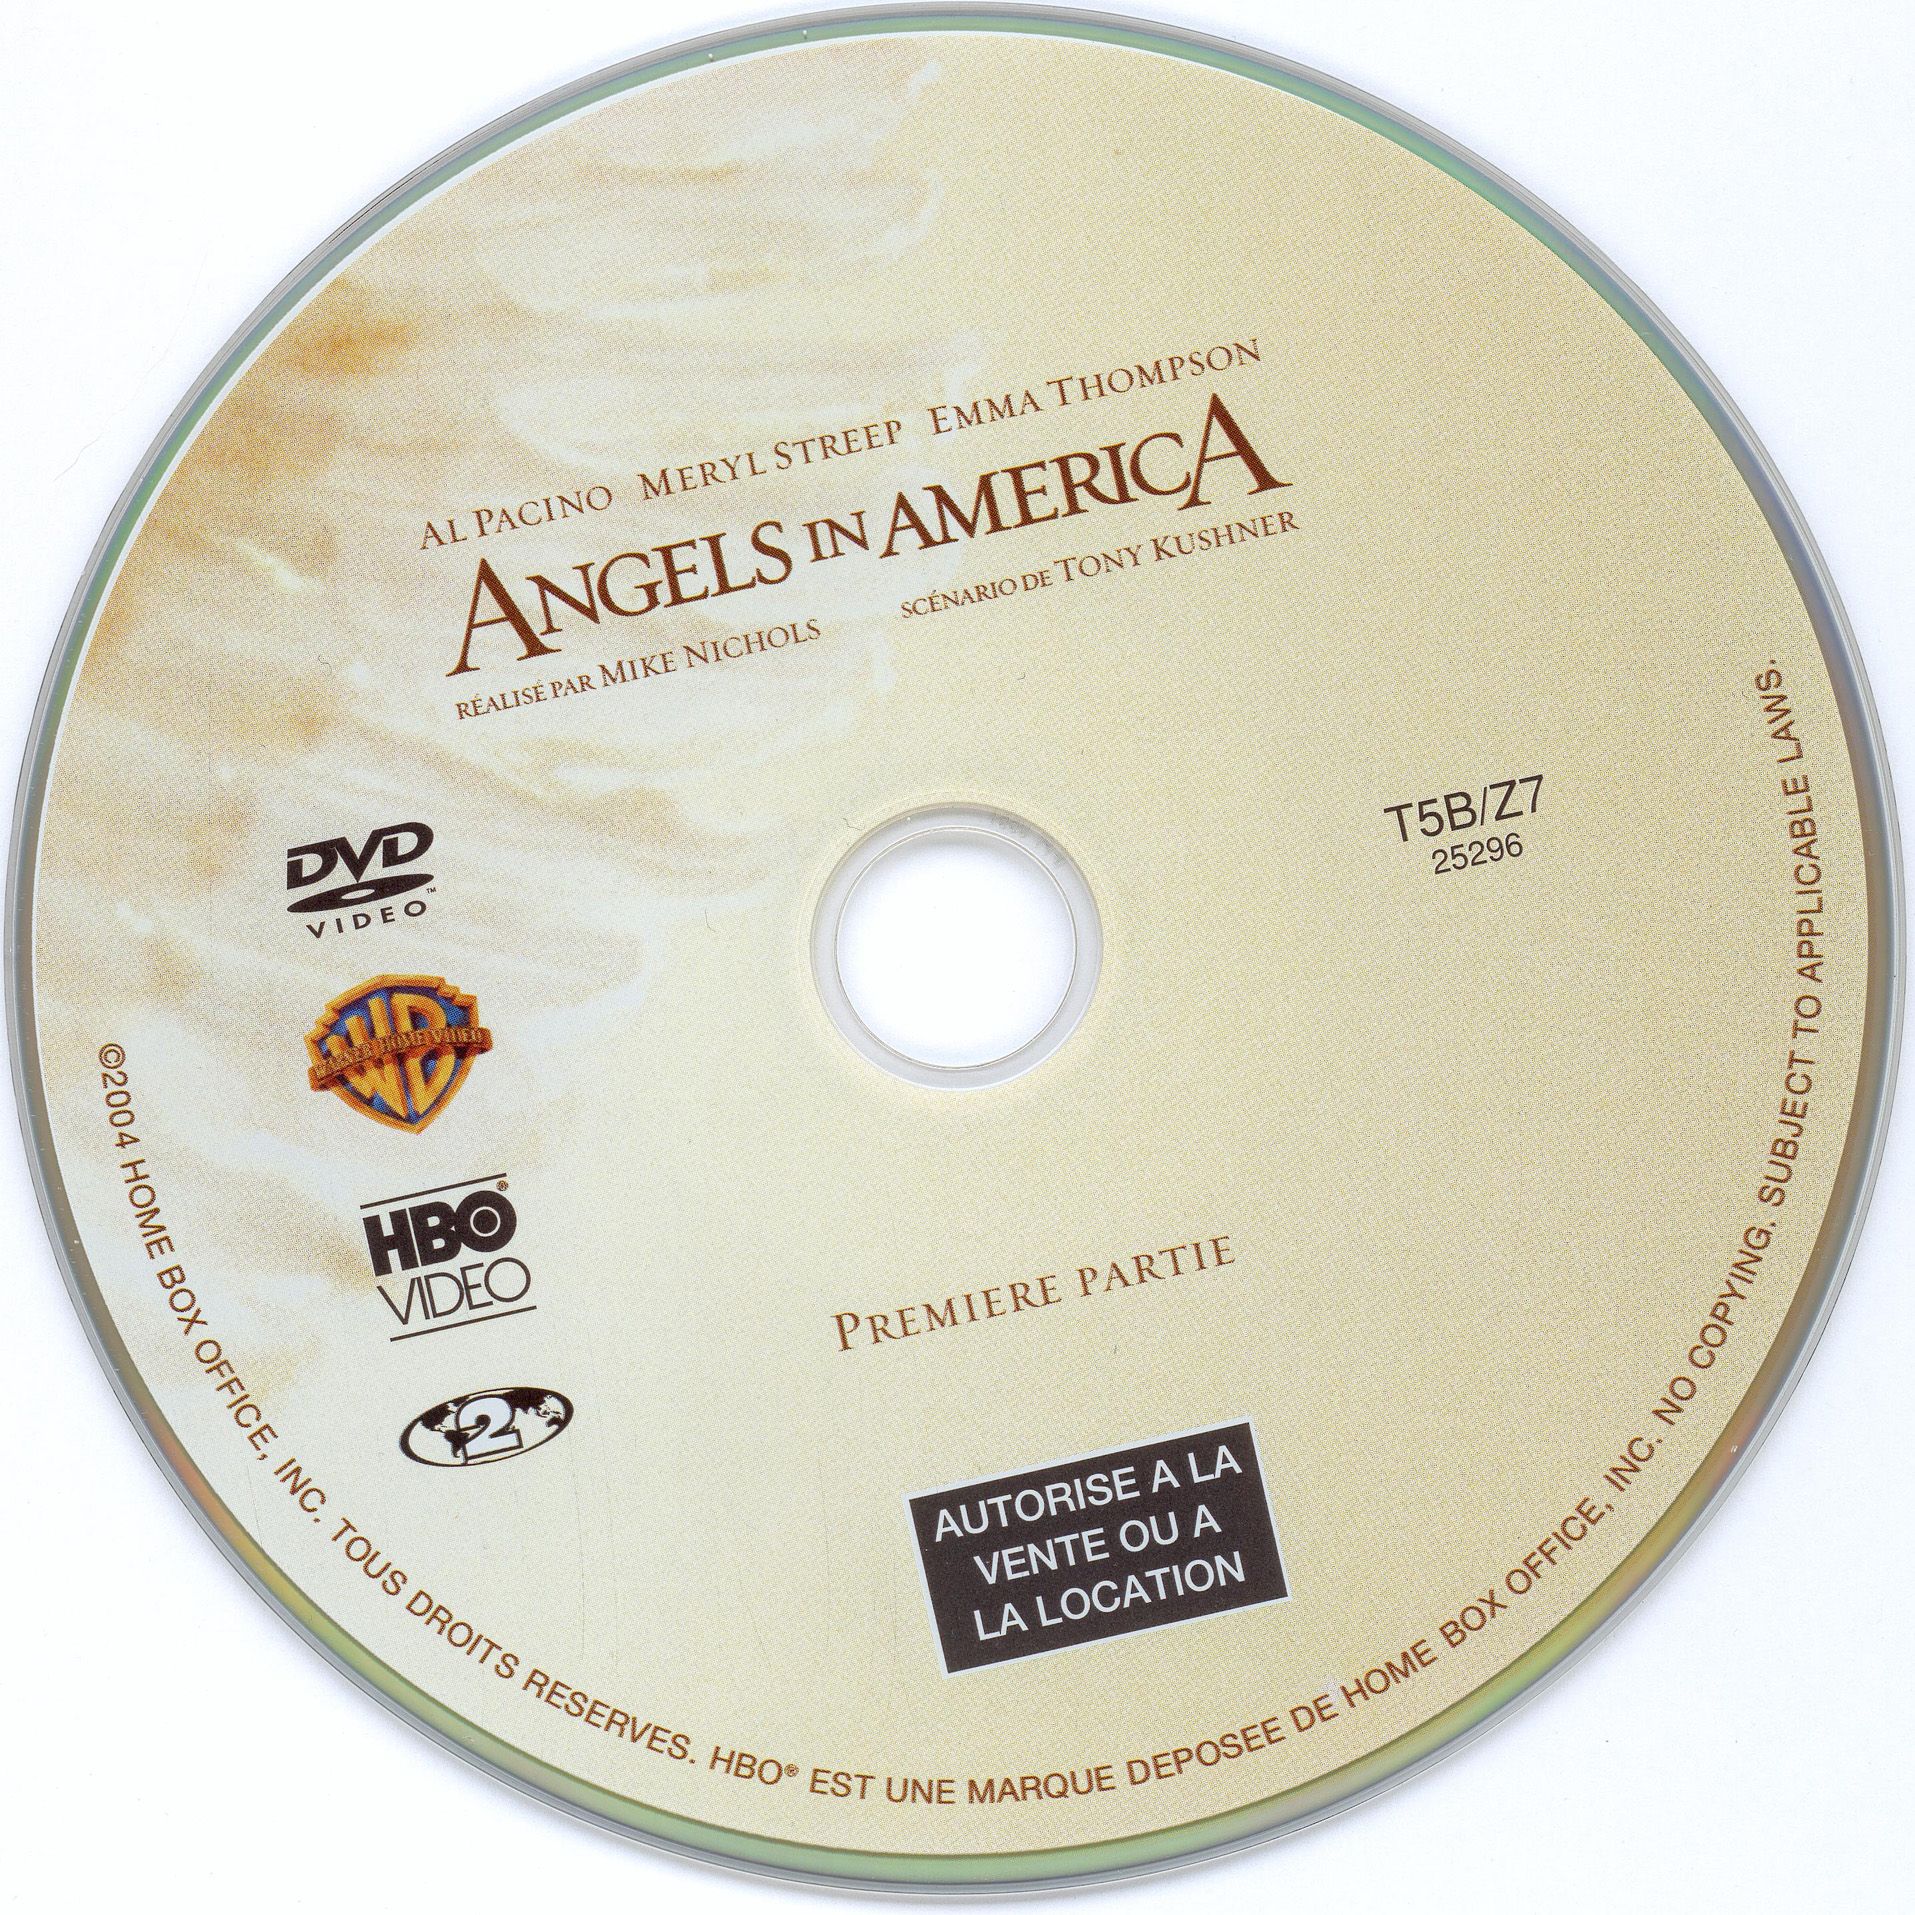 Angels in America DISC 1